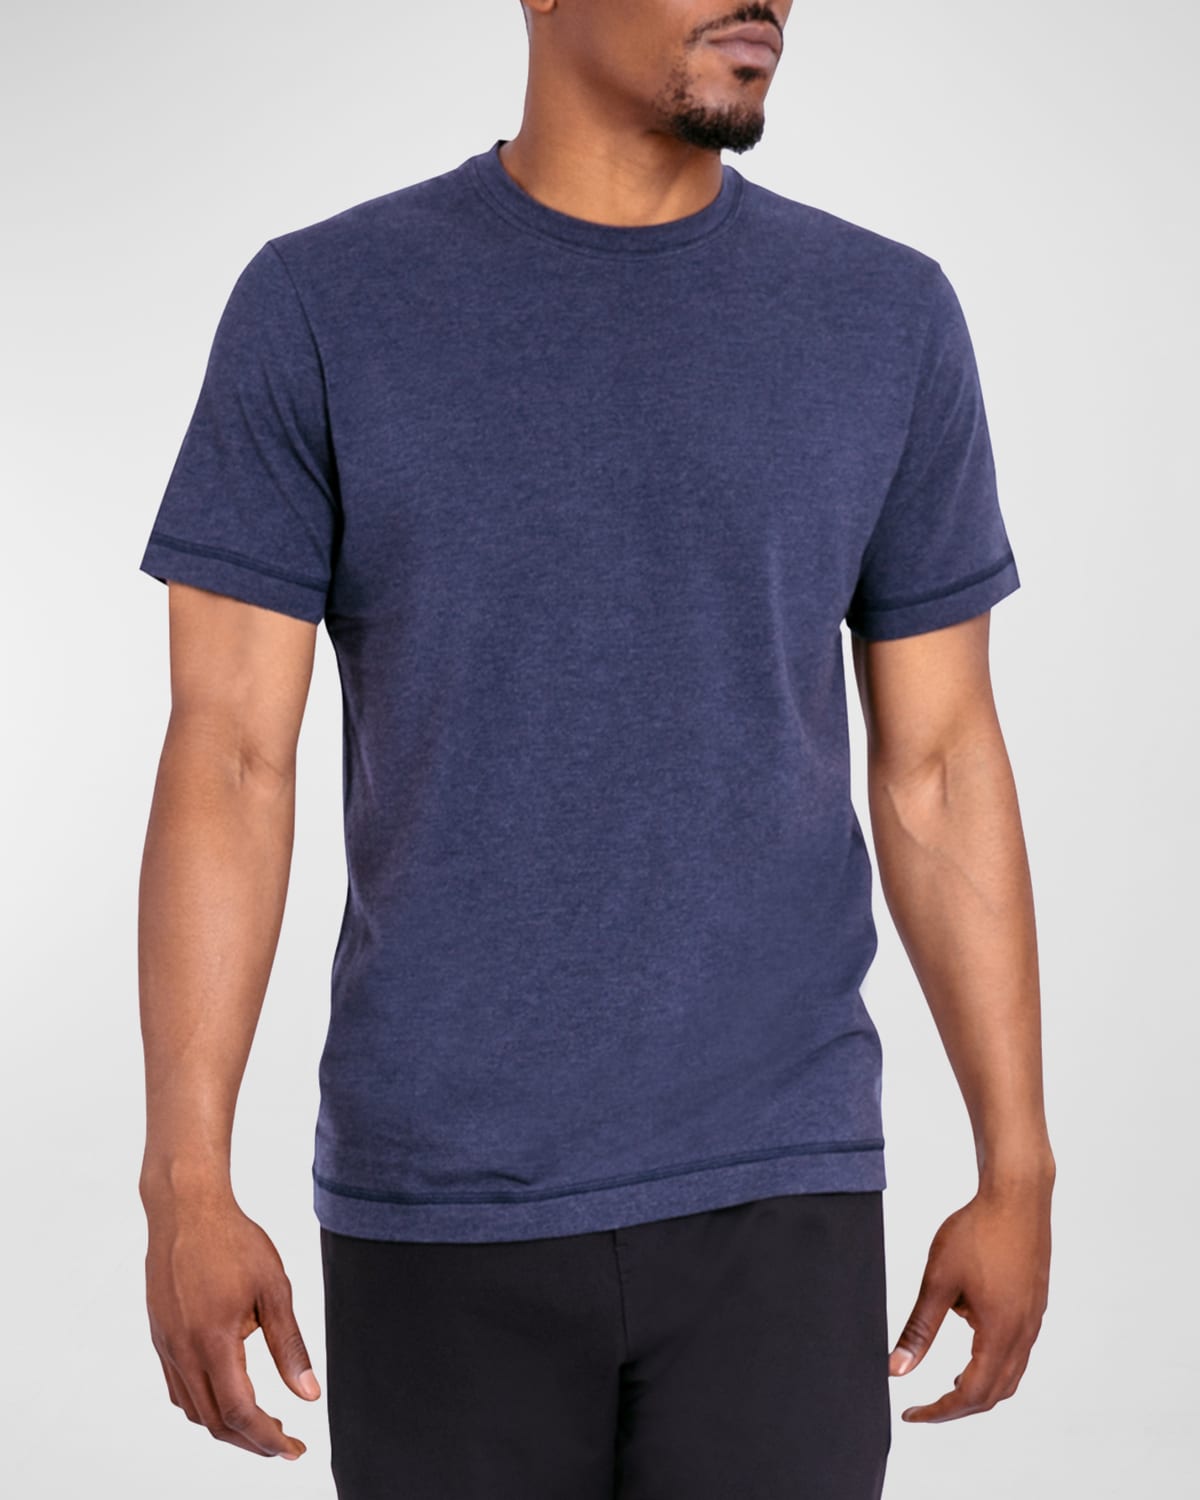 Men's Solid Athletic T-Shirt